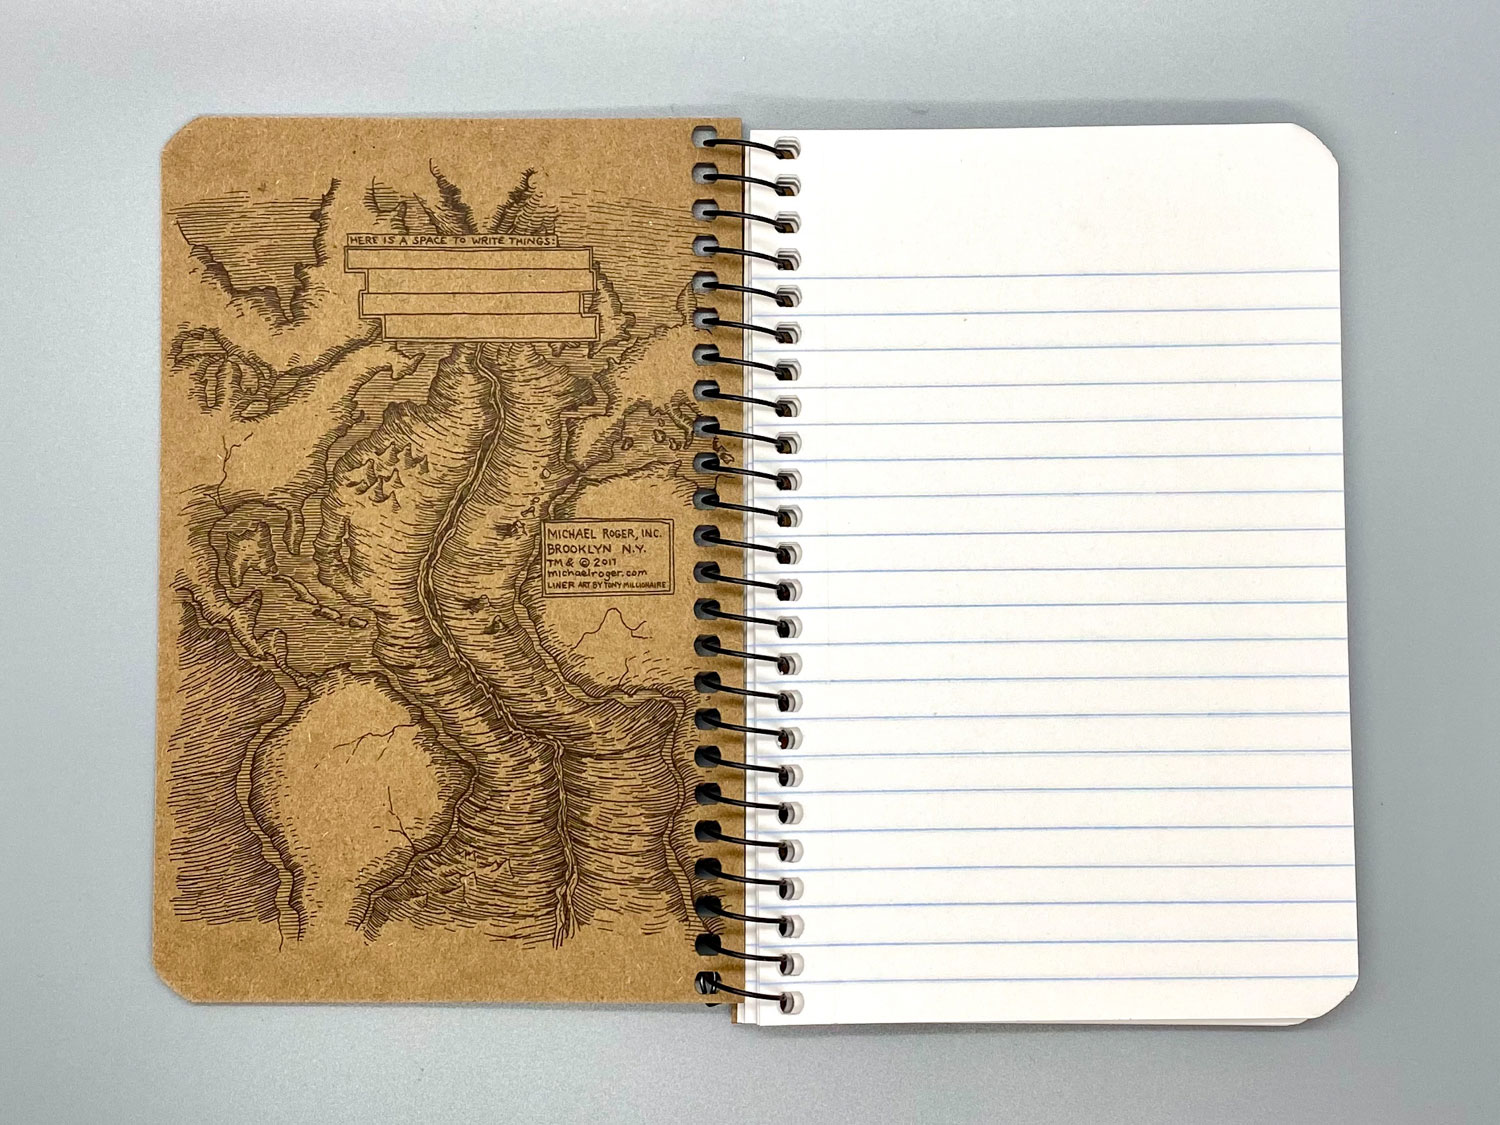 decomposition book notebook